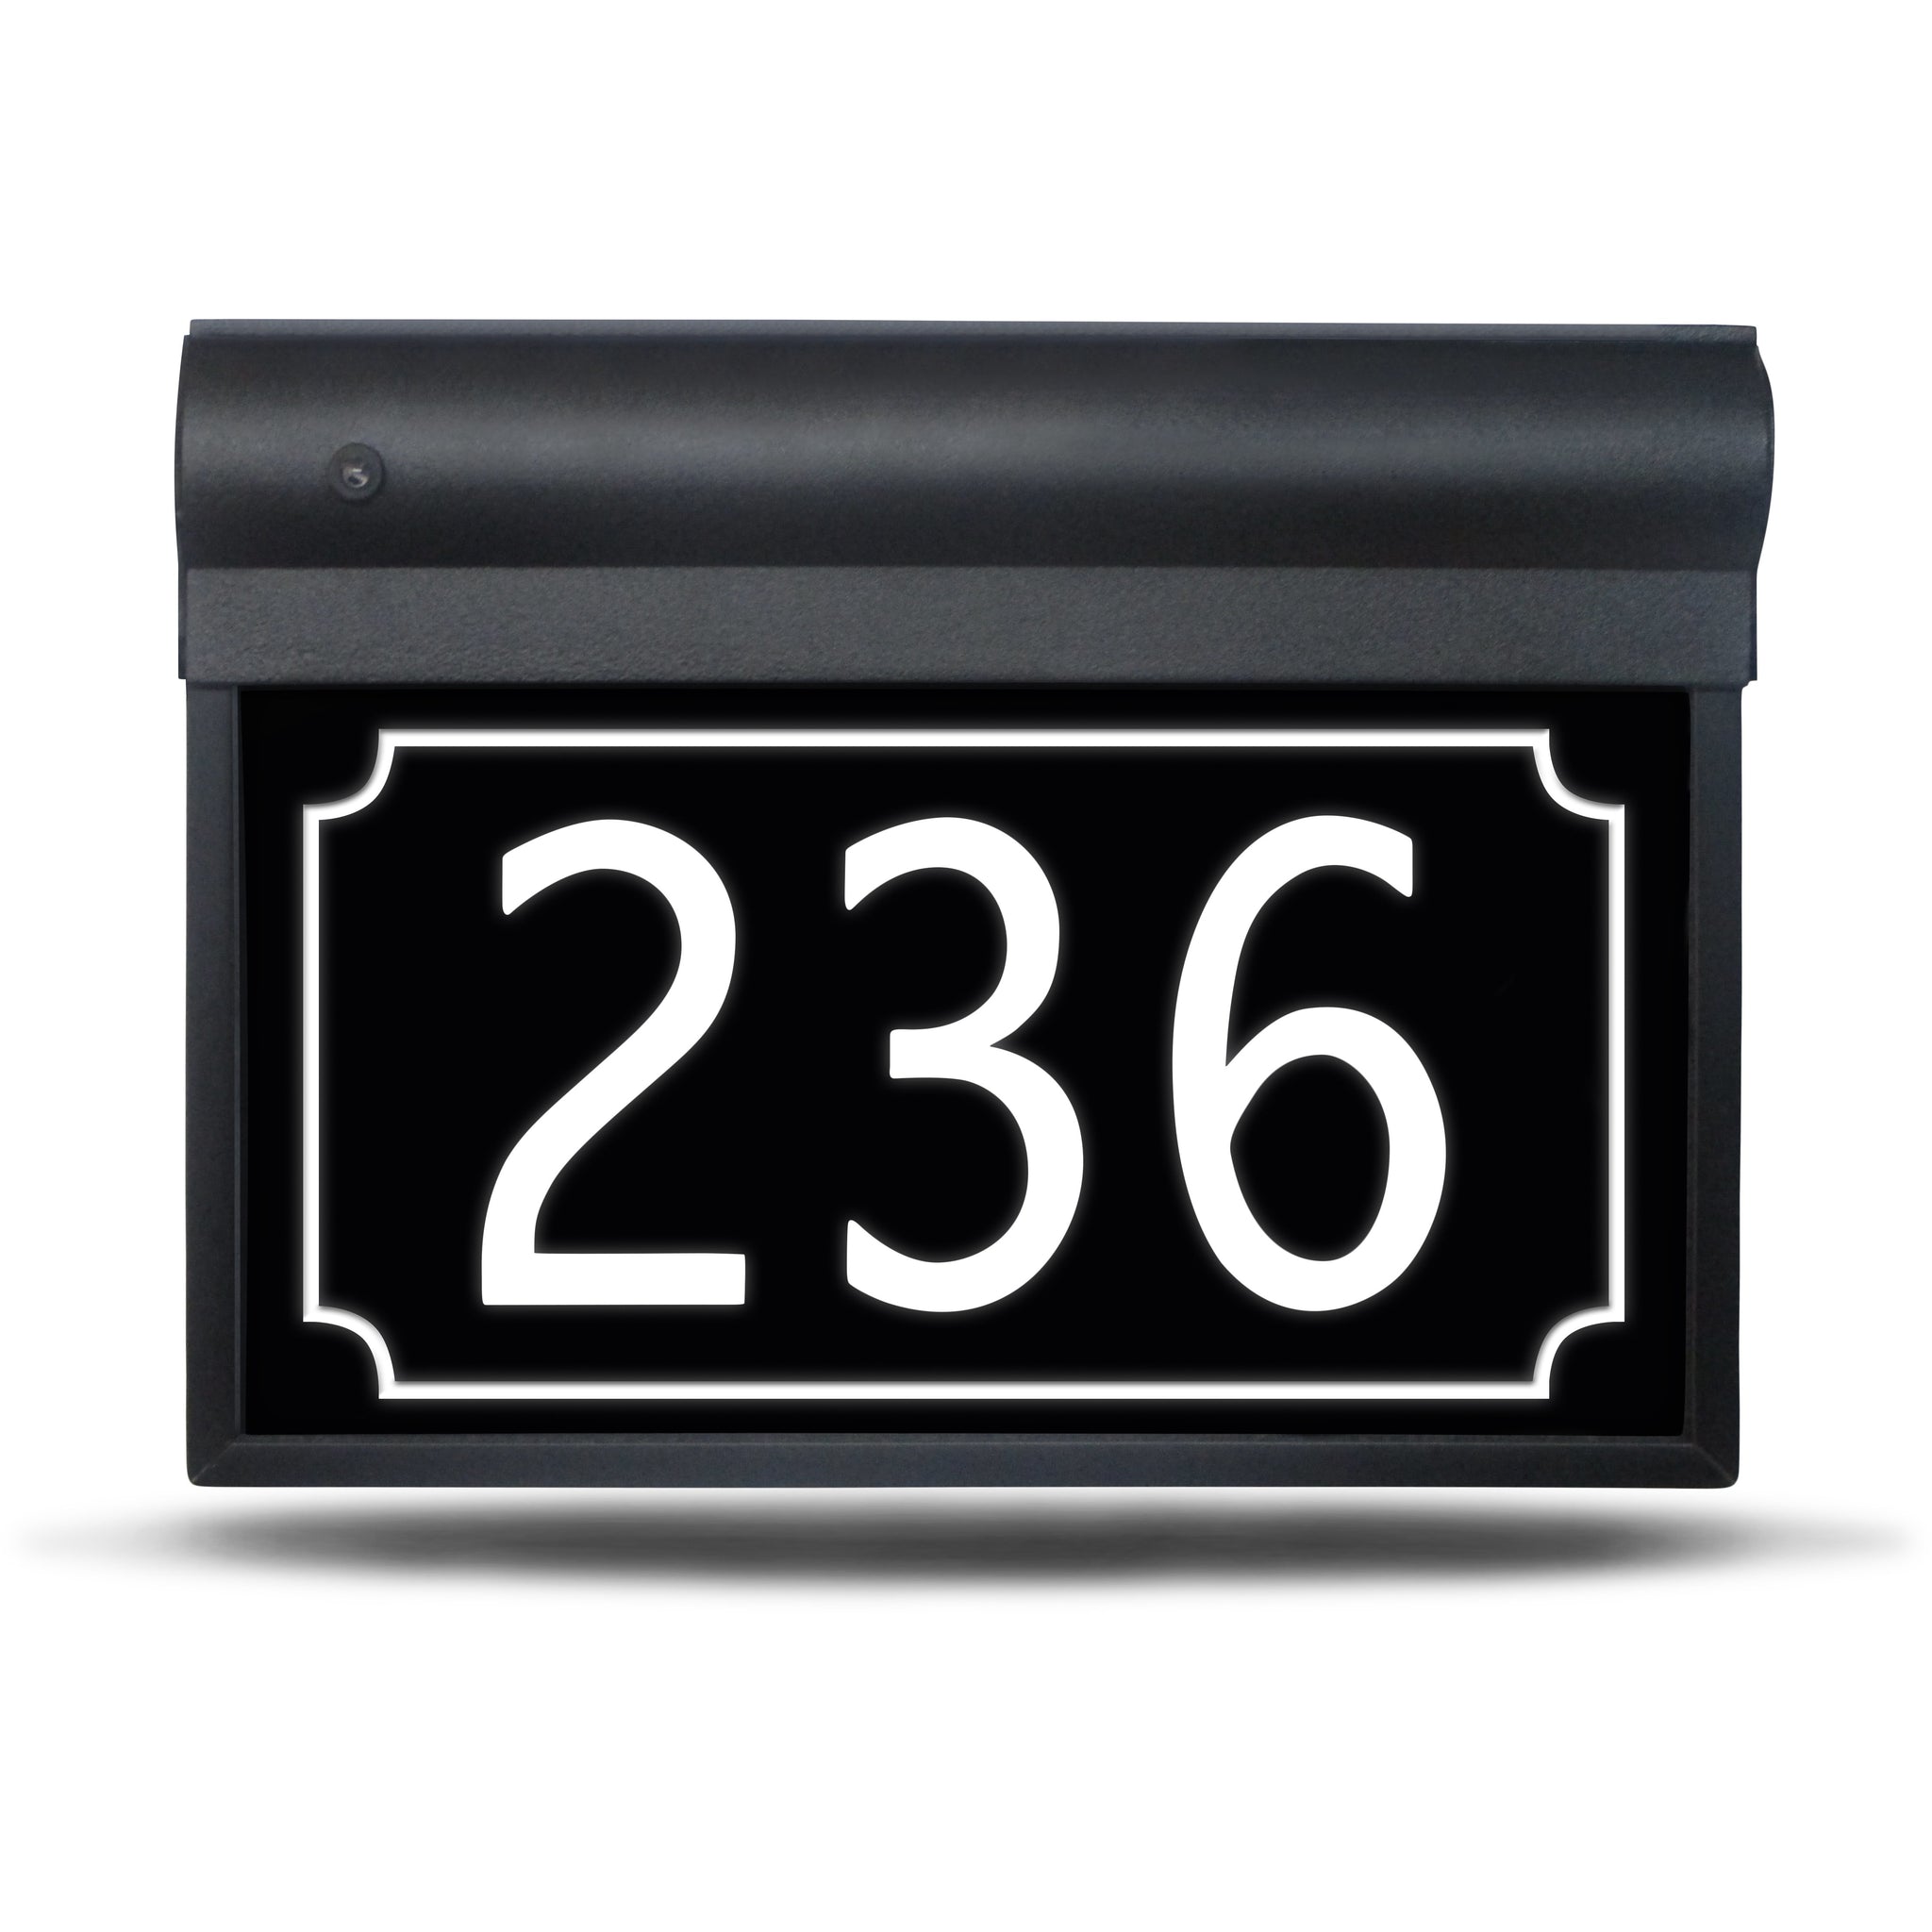 SL-201-17'' – Enlight Border with Bevel – Illuminated Address Sign